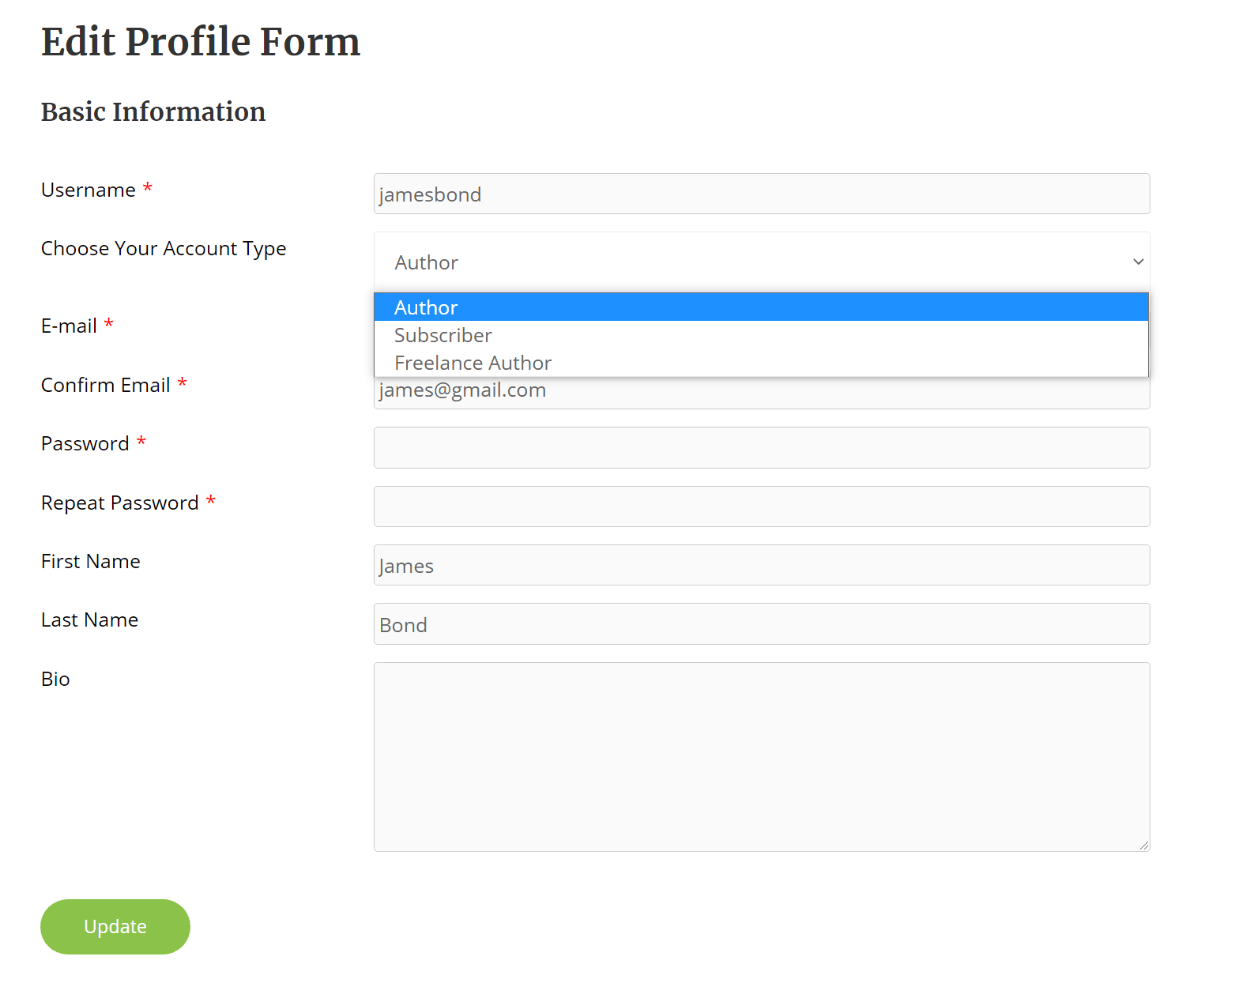 Edit profile forms